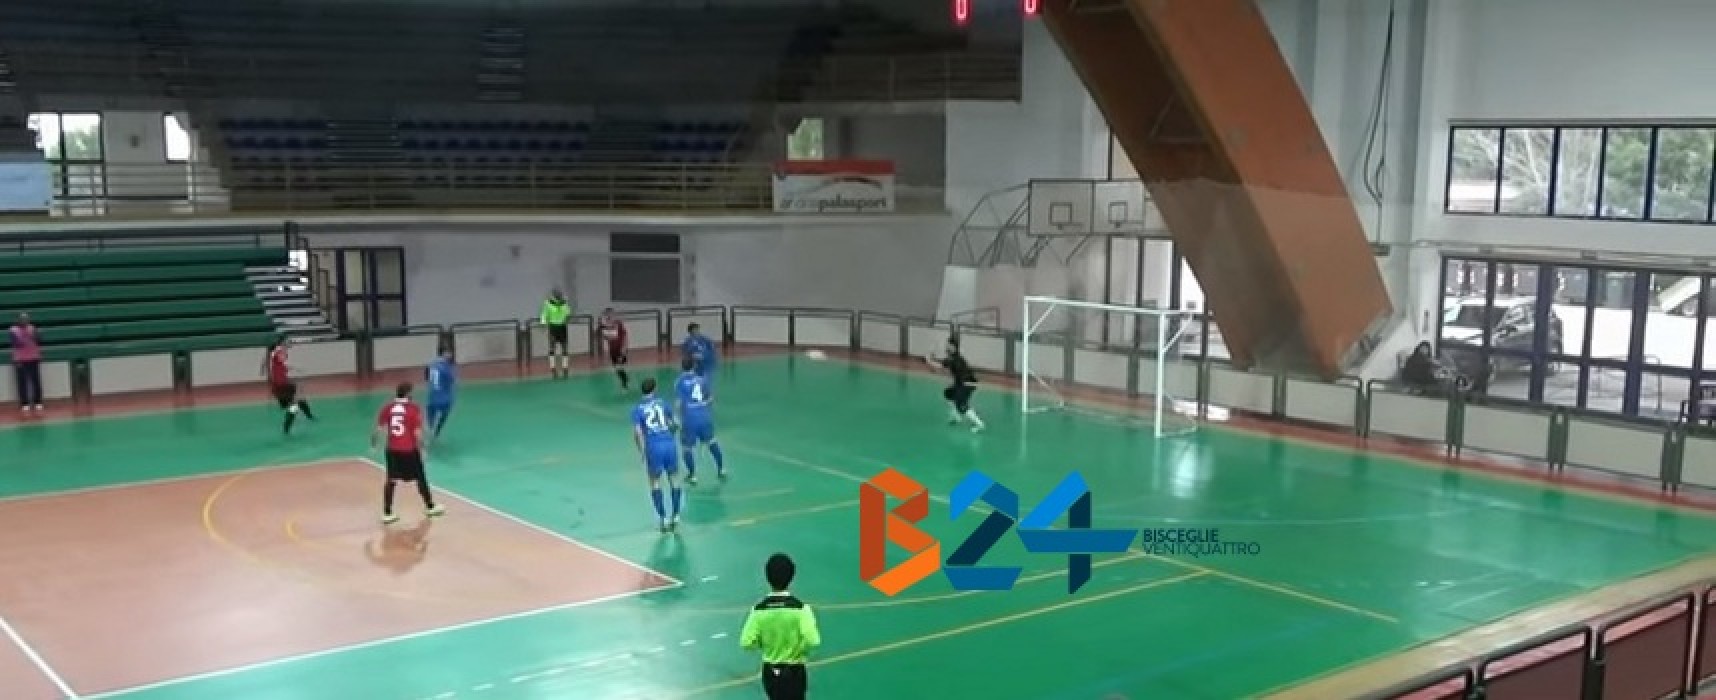 Futsal Andria-Diaz 5-5 / HIGHLIGHTS VIDEO